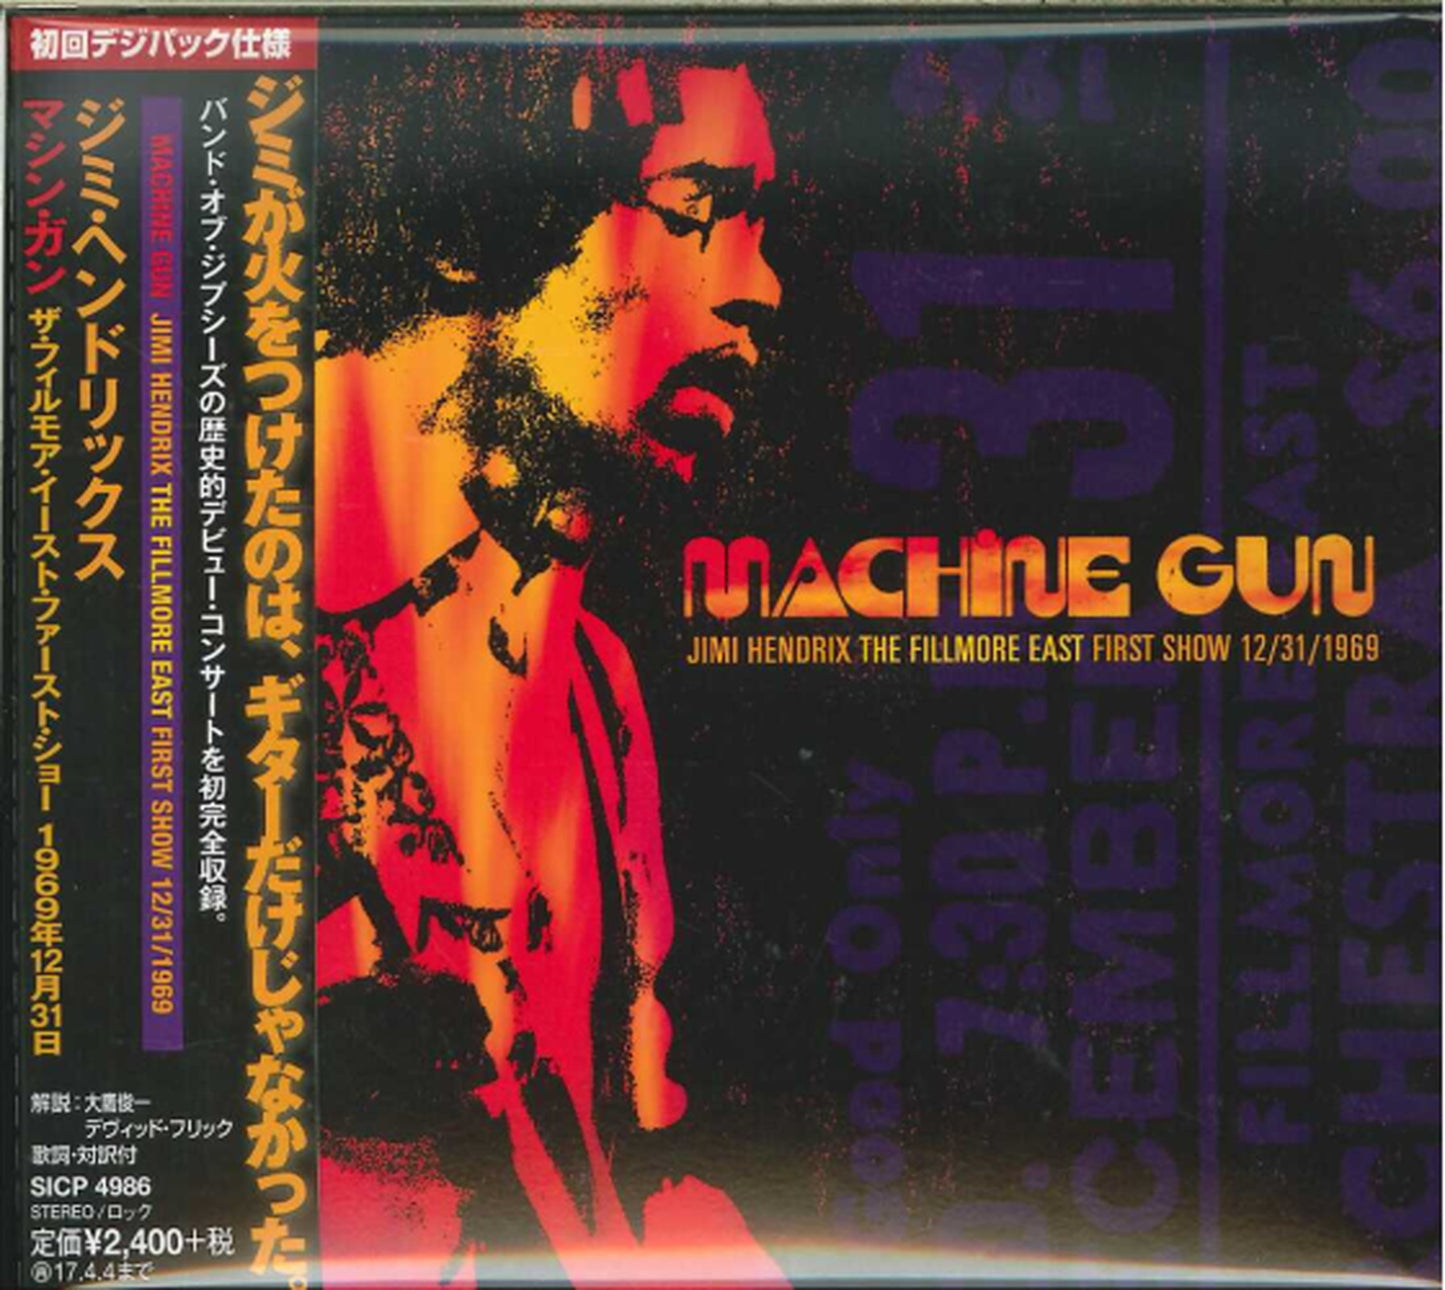 Jimi Hendrix - Machine Gun Jimi Hendrix The Fillmore East First Show 12/31/1969 - Japan CD